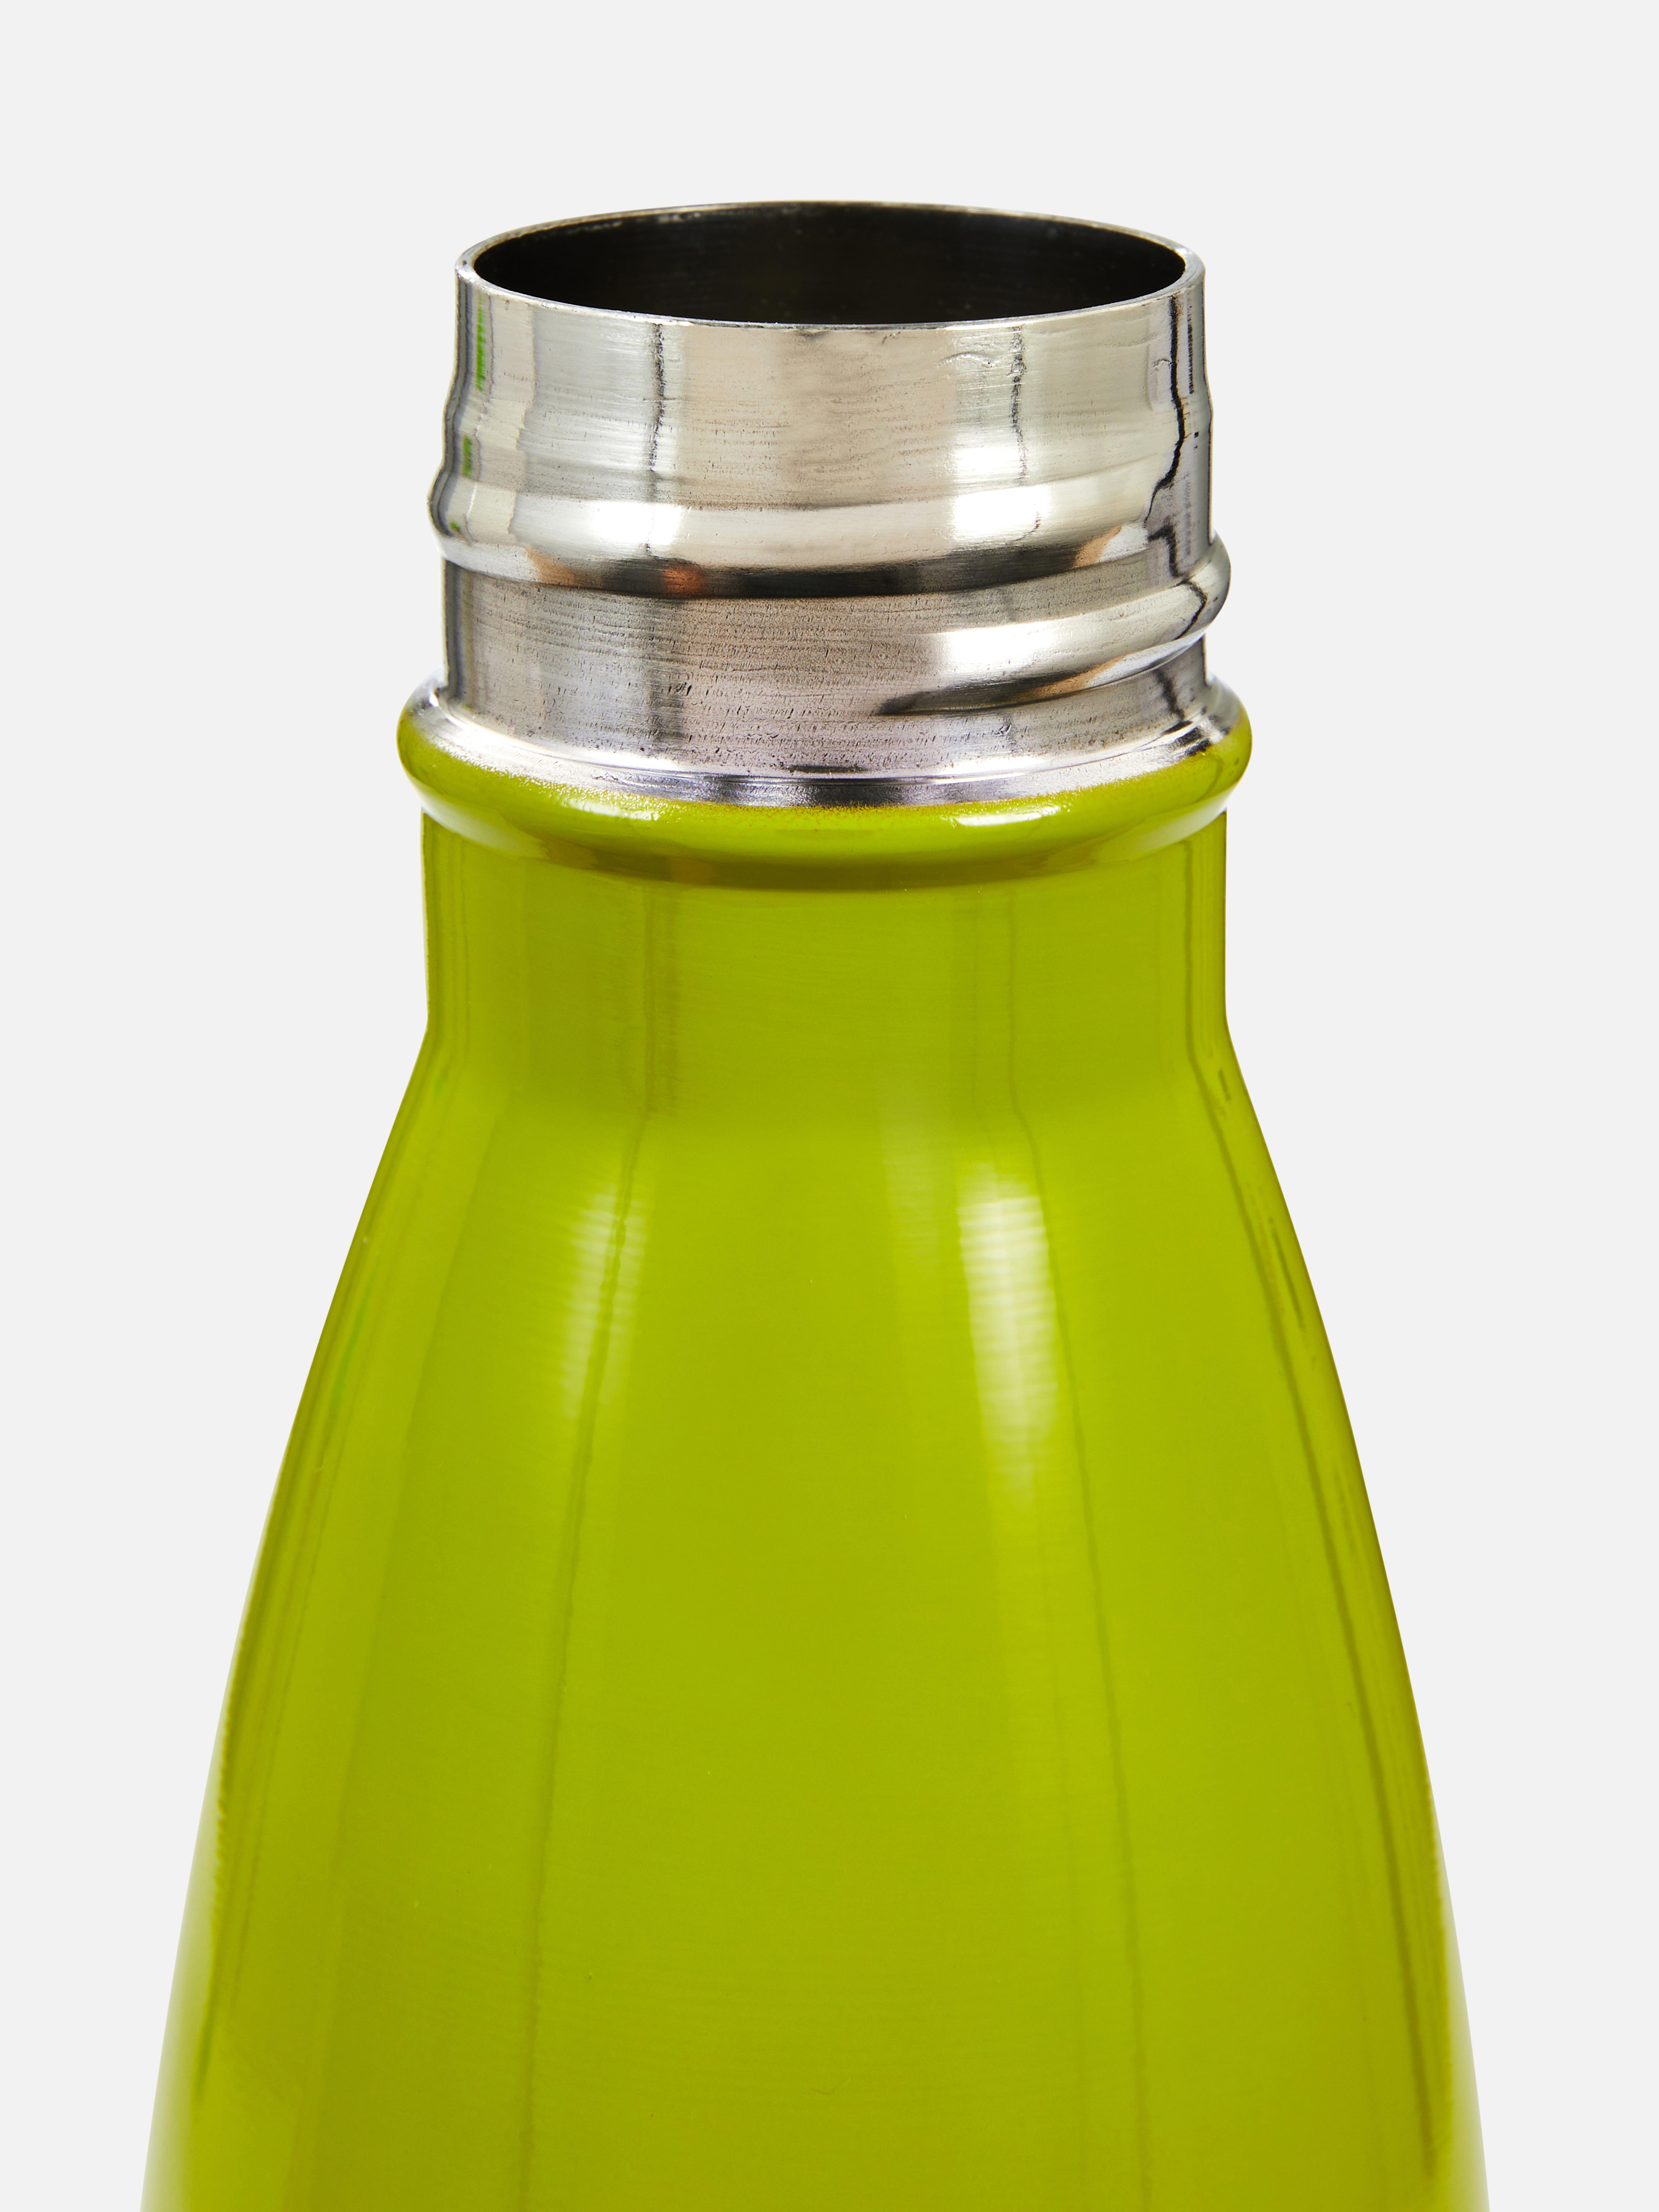 The Grinch Screw-Top Water Bottle